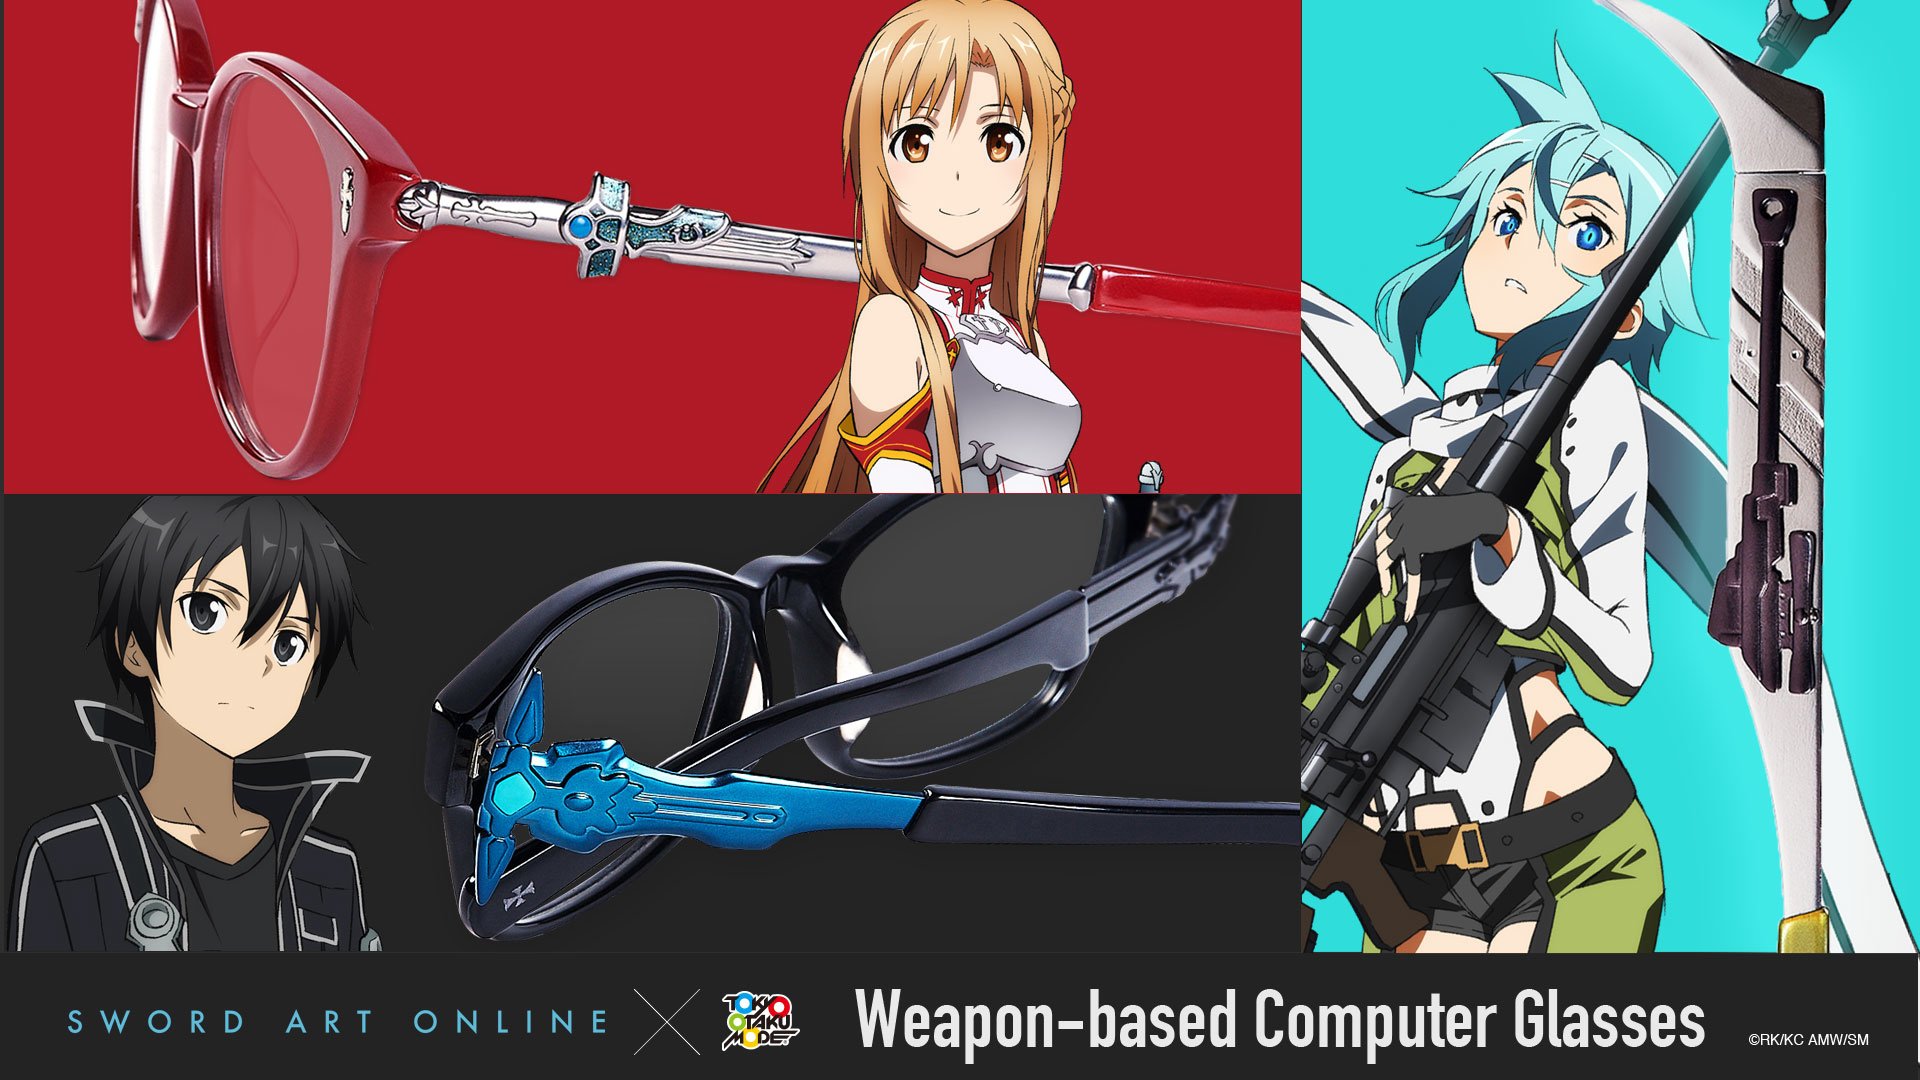 Sword Art Online Weapon-Based Computer Glasses